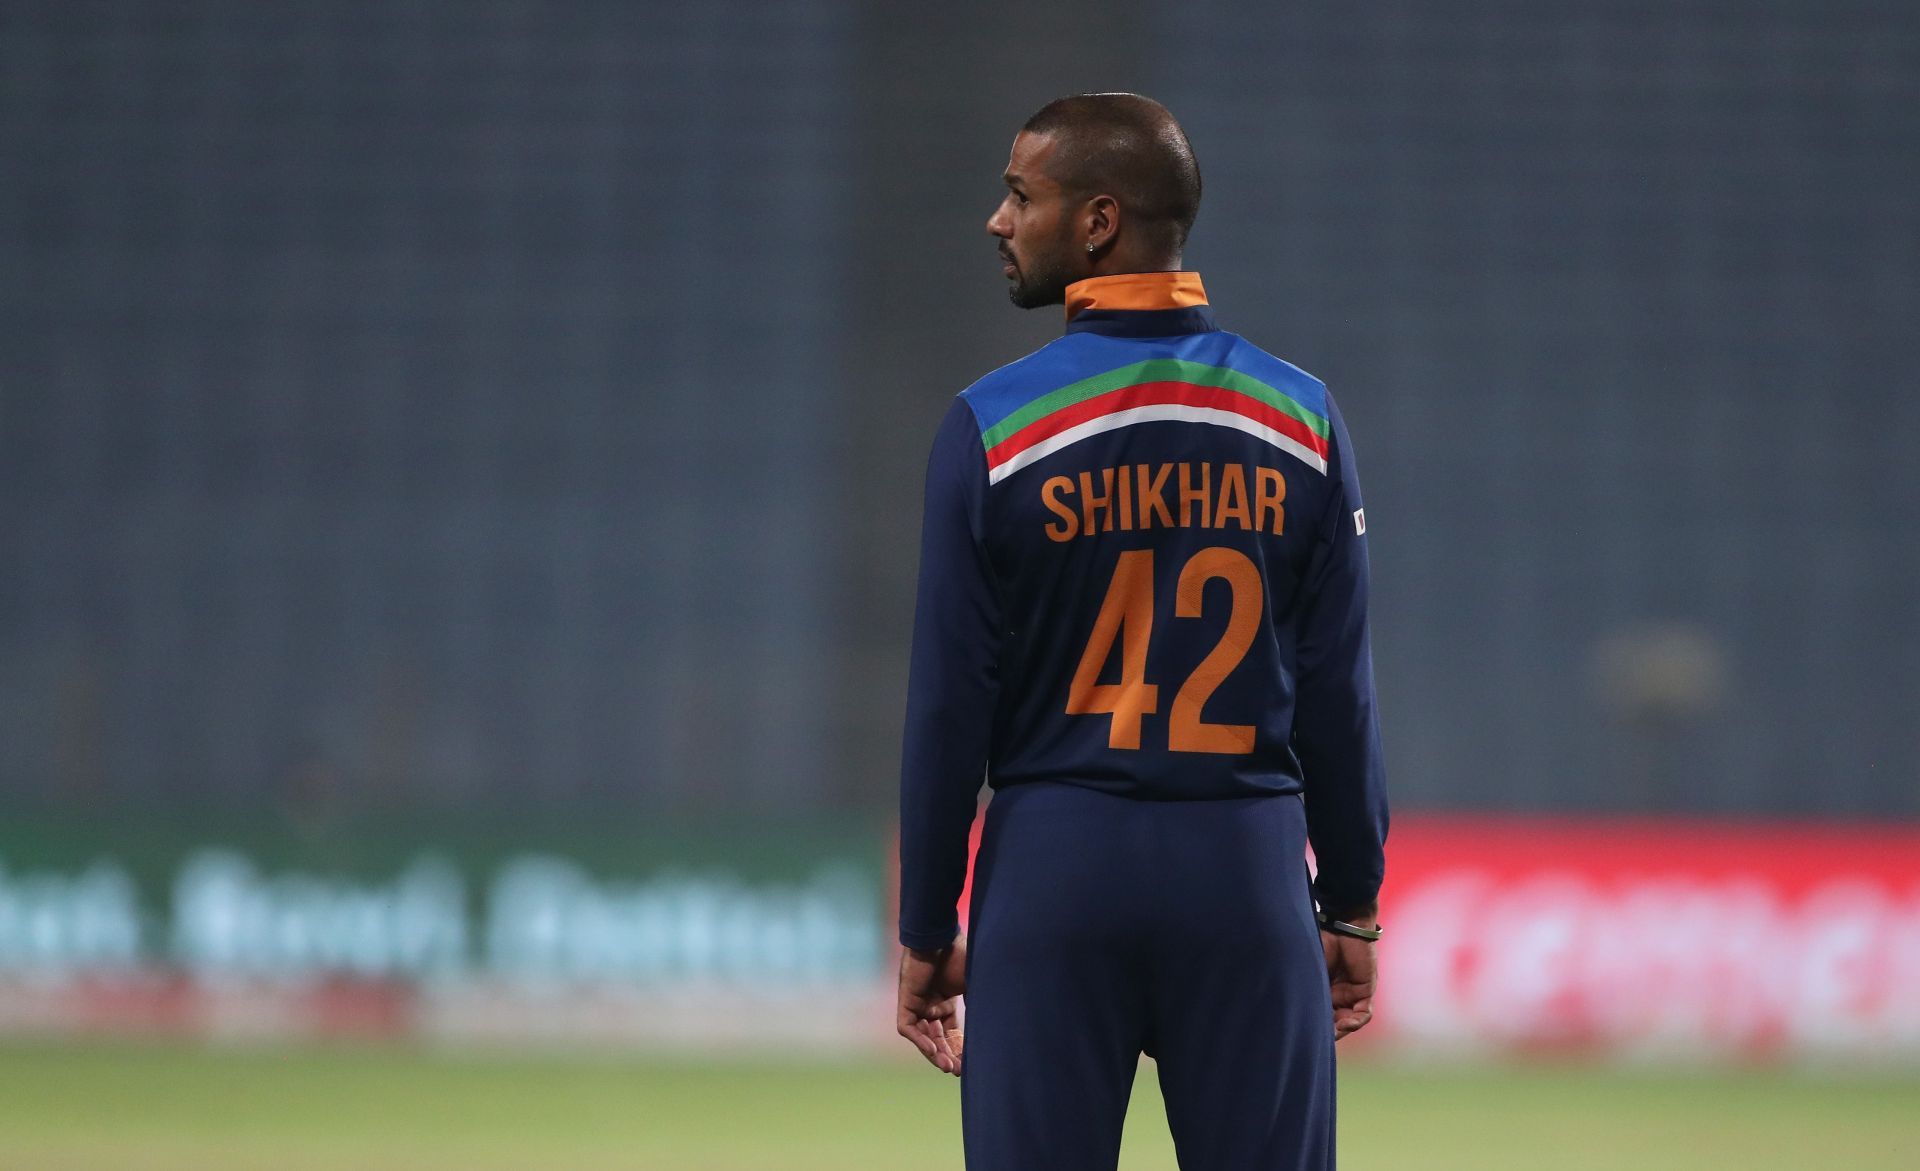 Shikhar Dhawan captained India on the tour of Sri Lanka